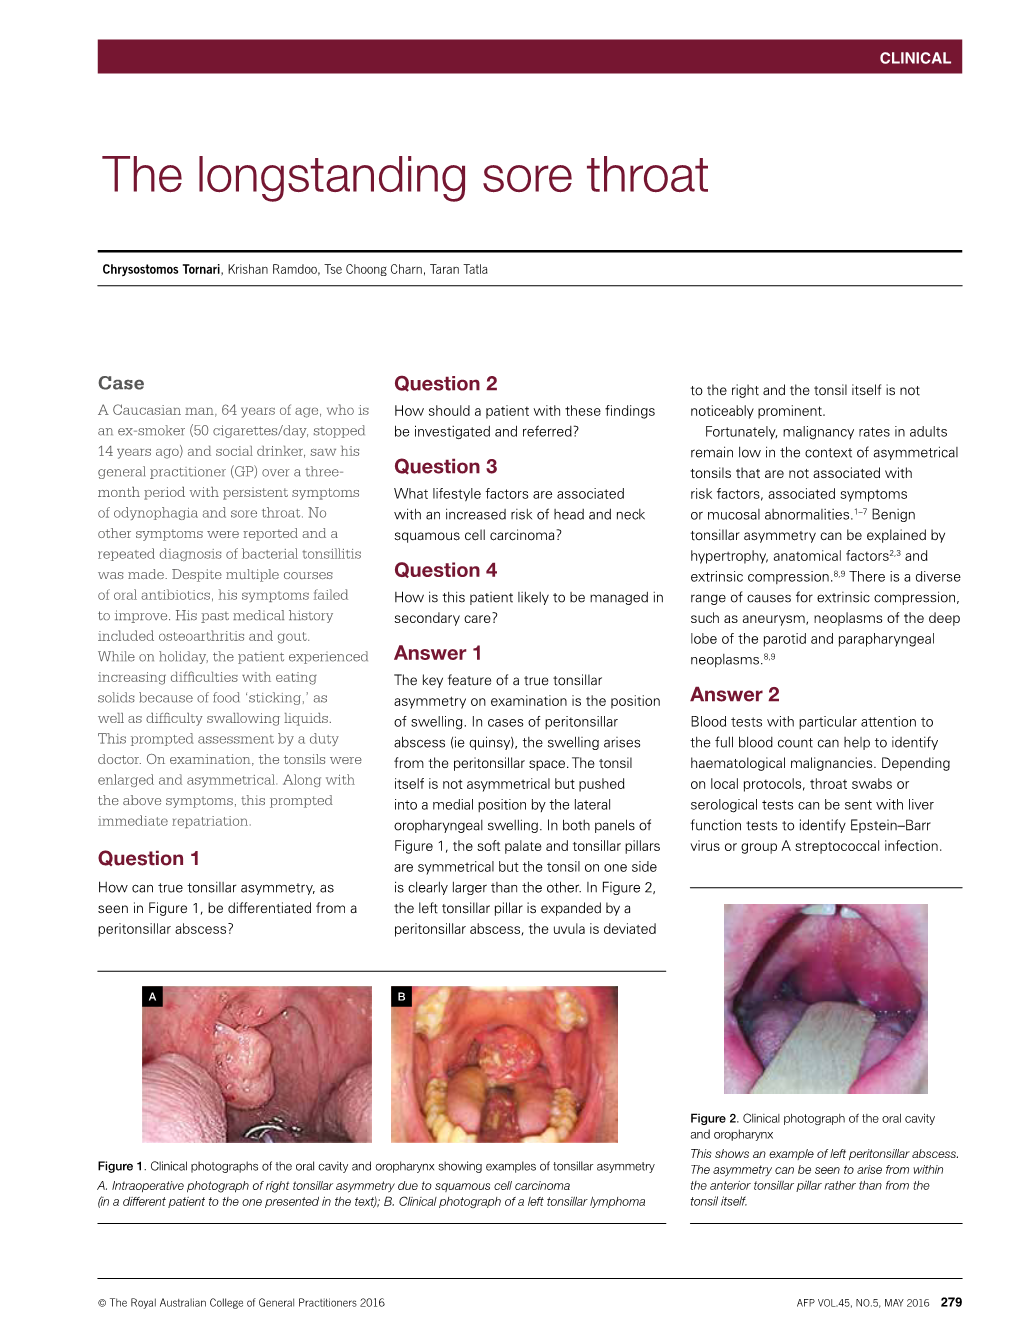 The Longstanding Sore Throat